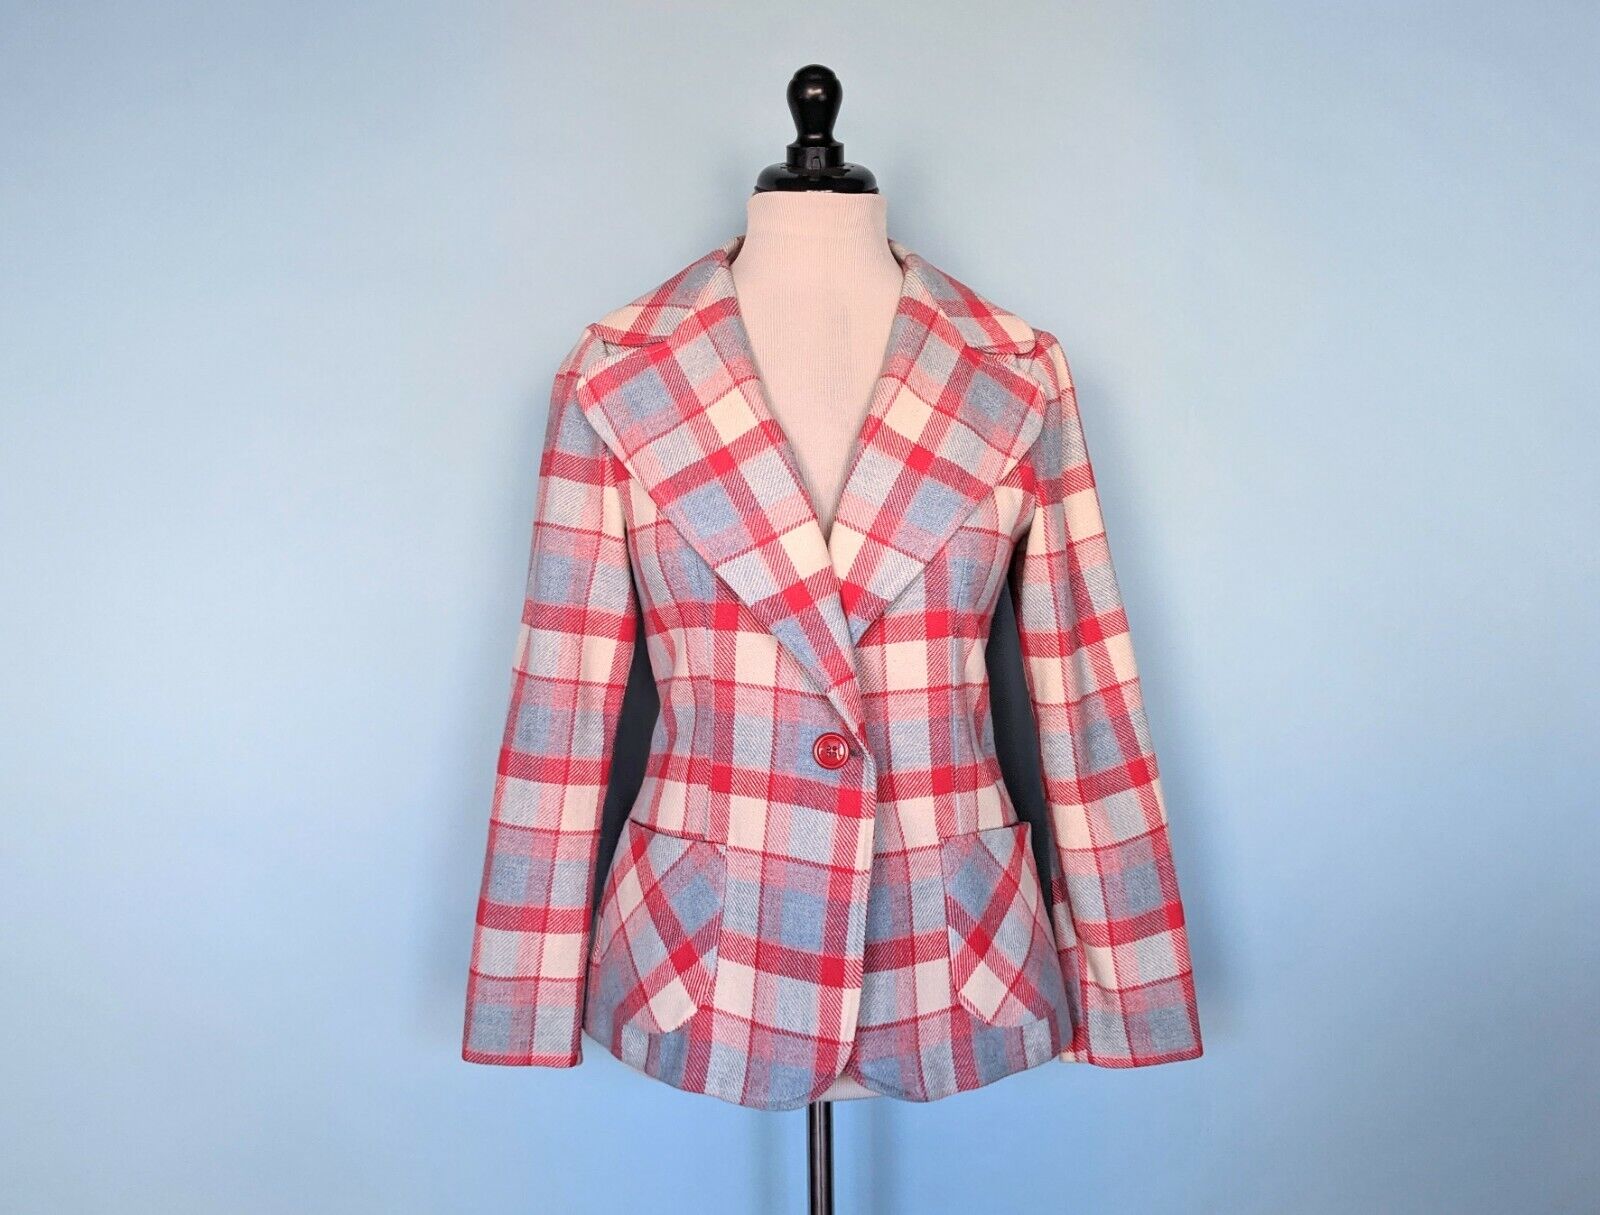 Vintage 70s Jonathan Logan Plaid Cheap bargain Jacket Tailore Suit 1970s Wool Max 87% OFF